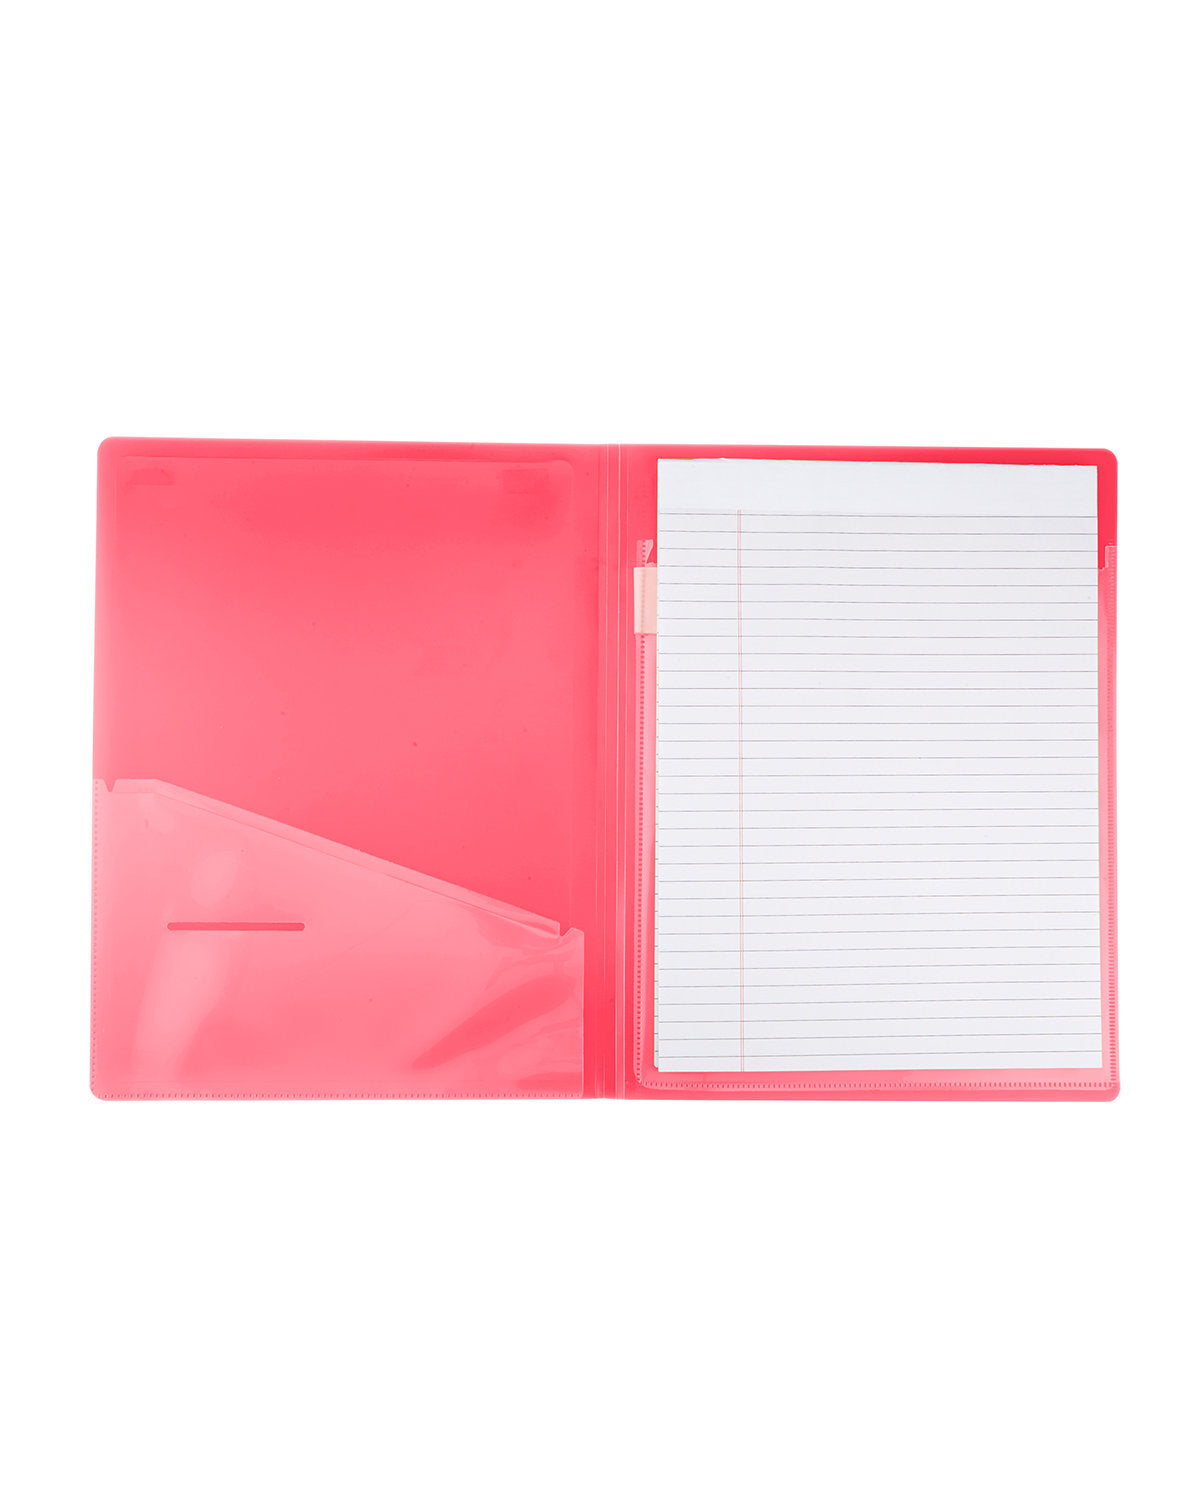 Folder With Writing Pad